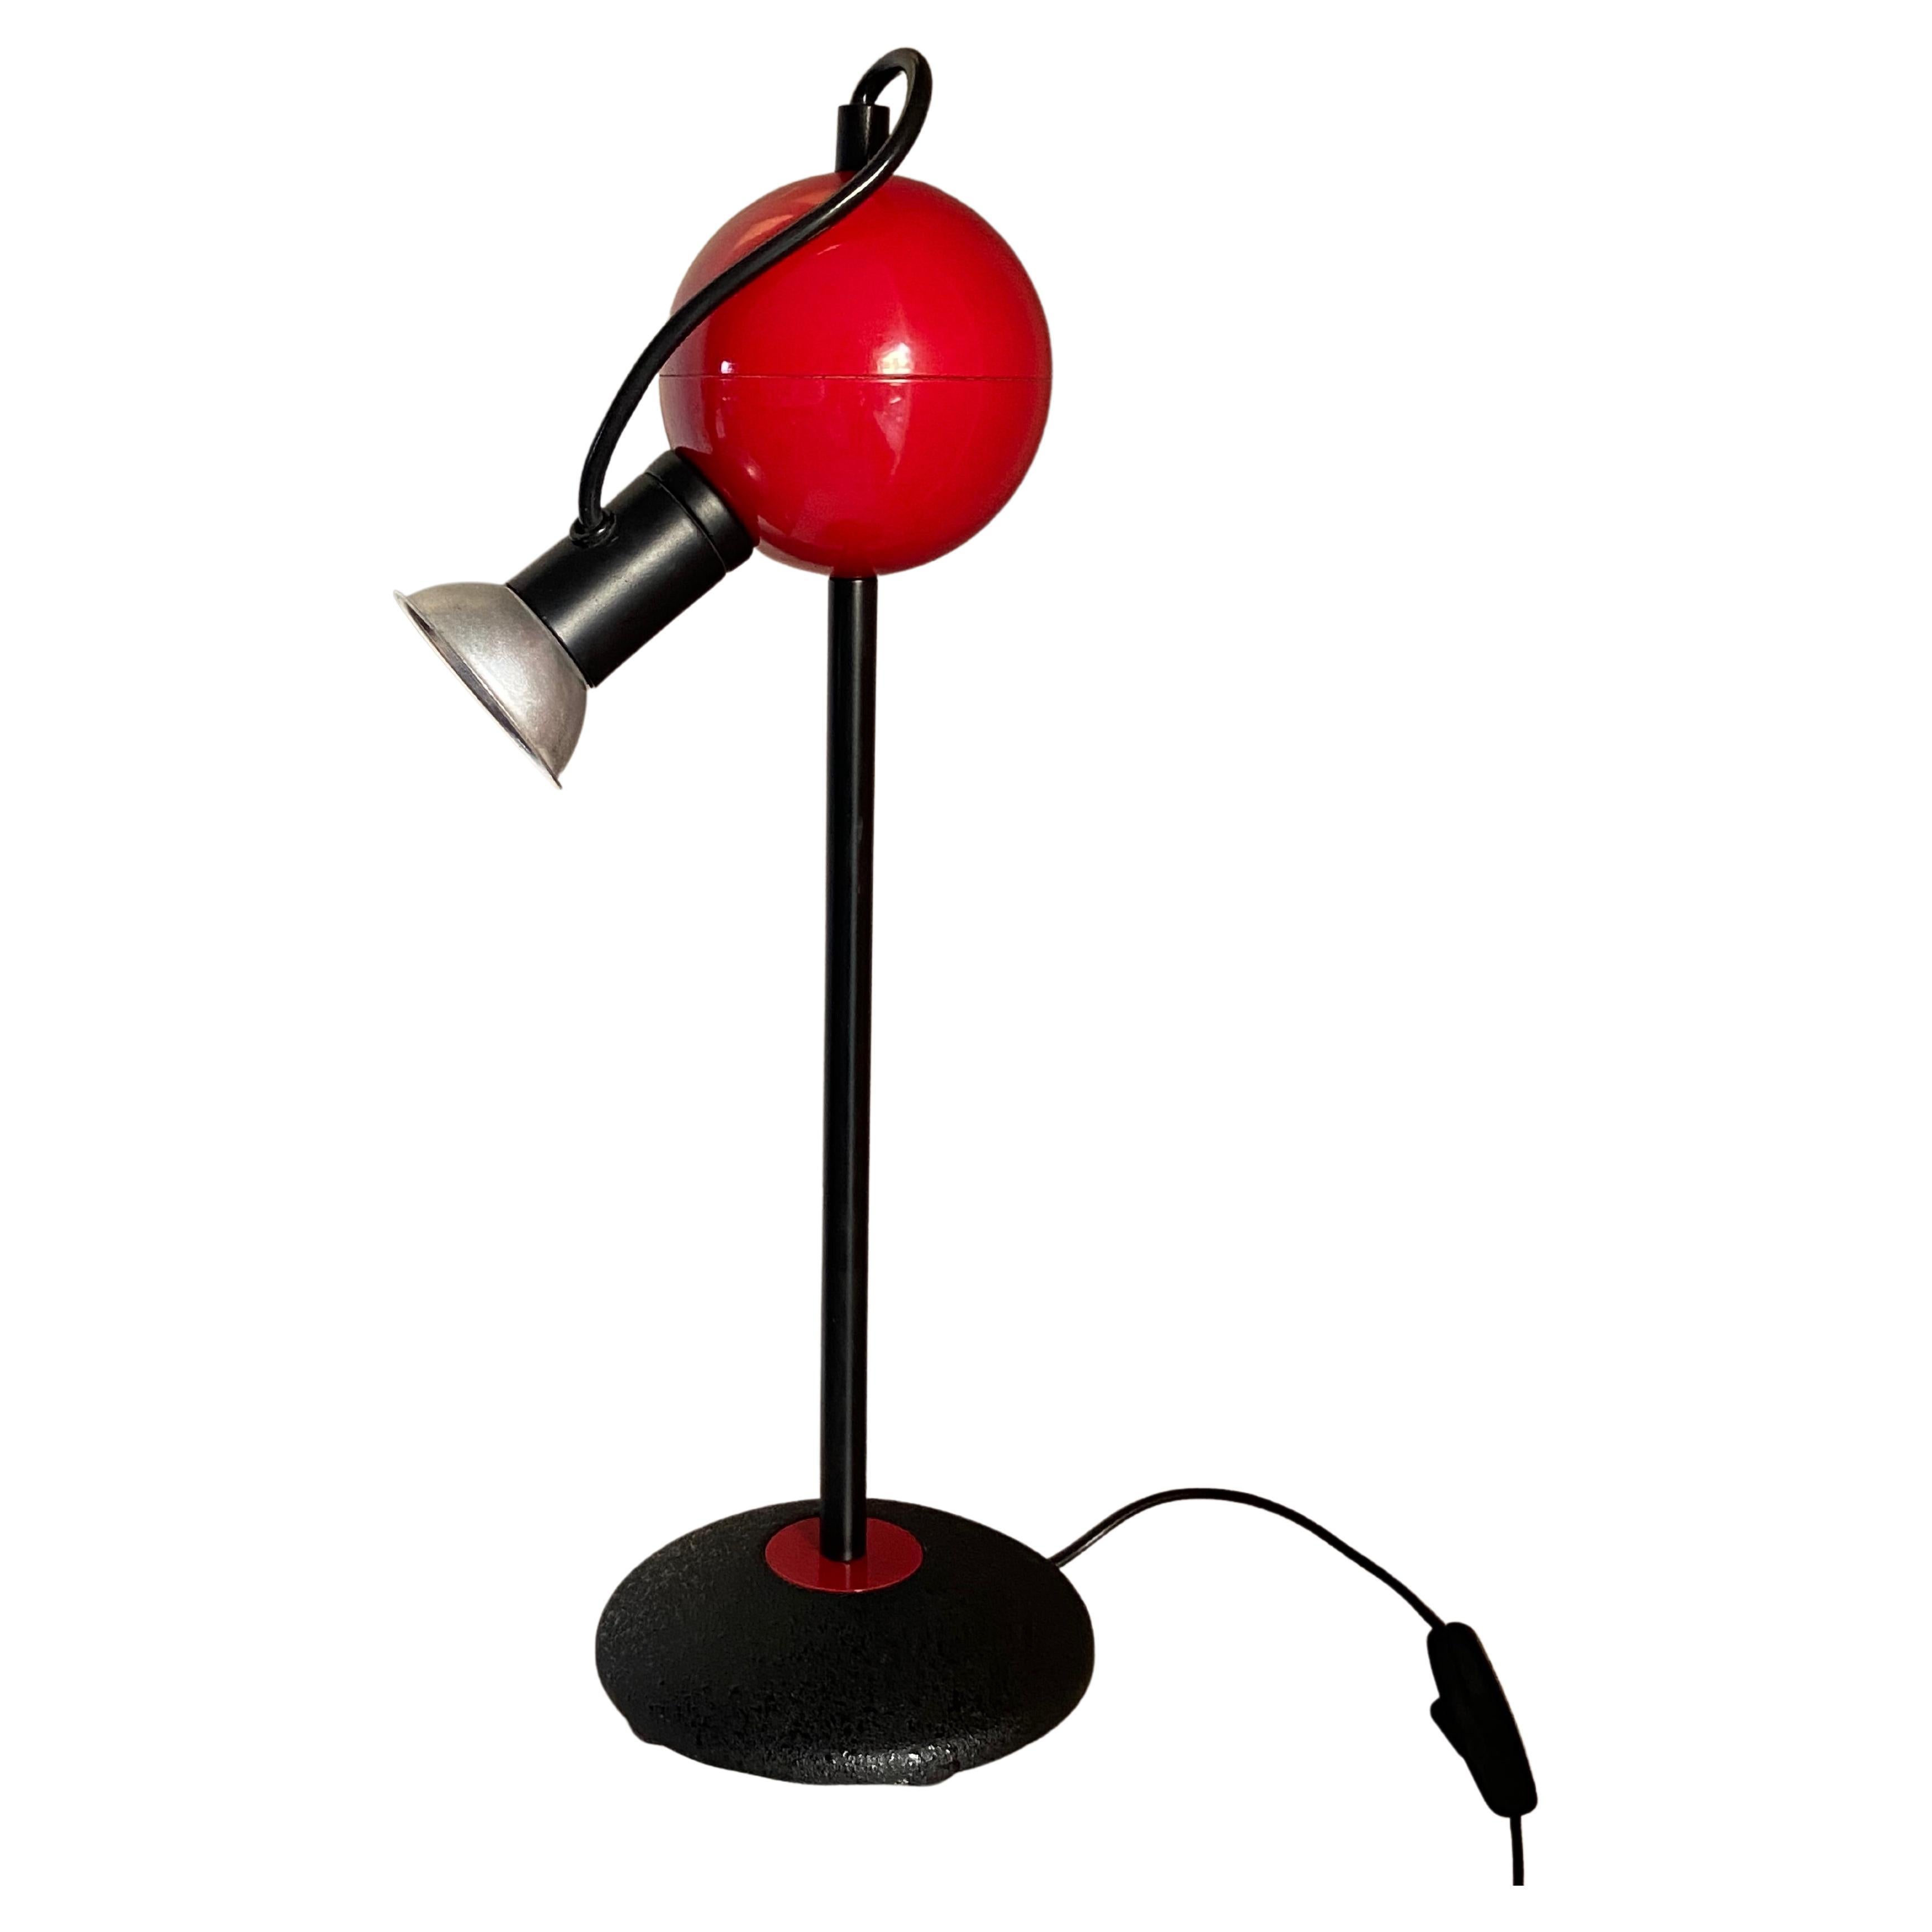 1980s Design Stefano Cevoli Table Lamp Produced by Vermezzo Made in Italy For Sale